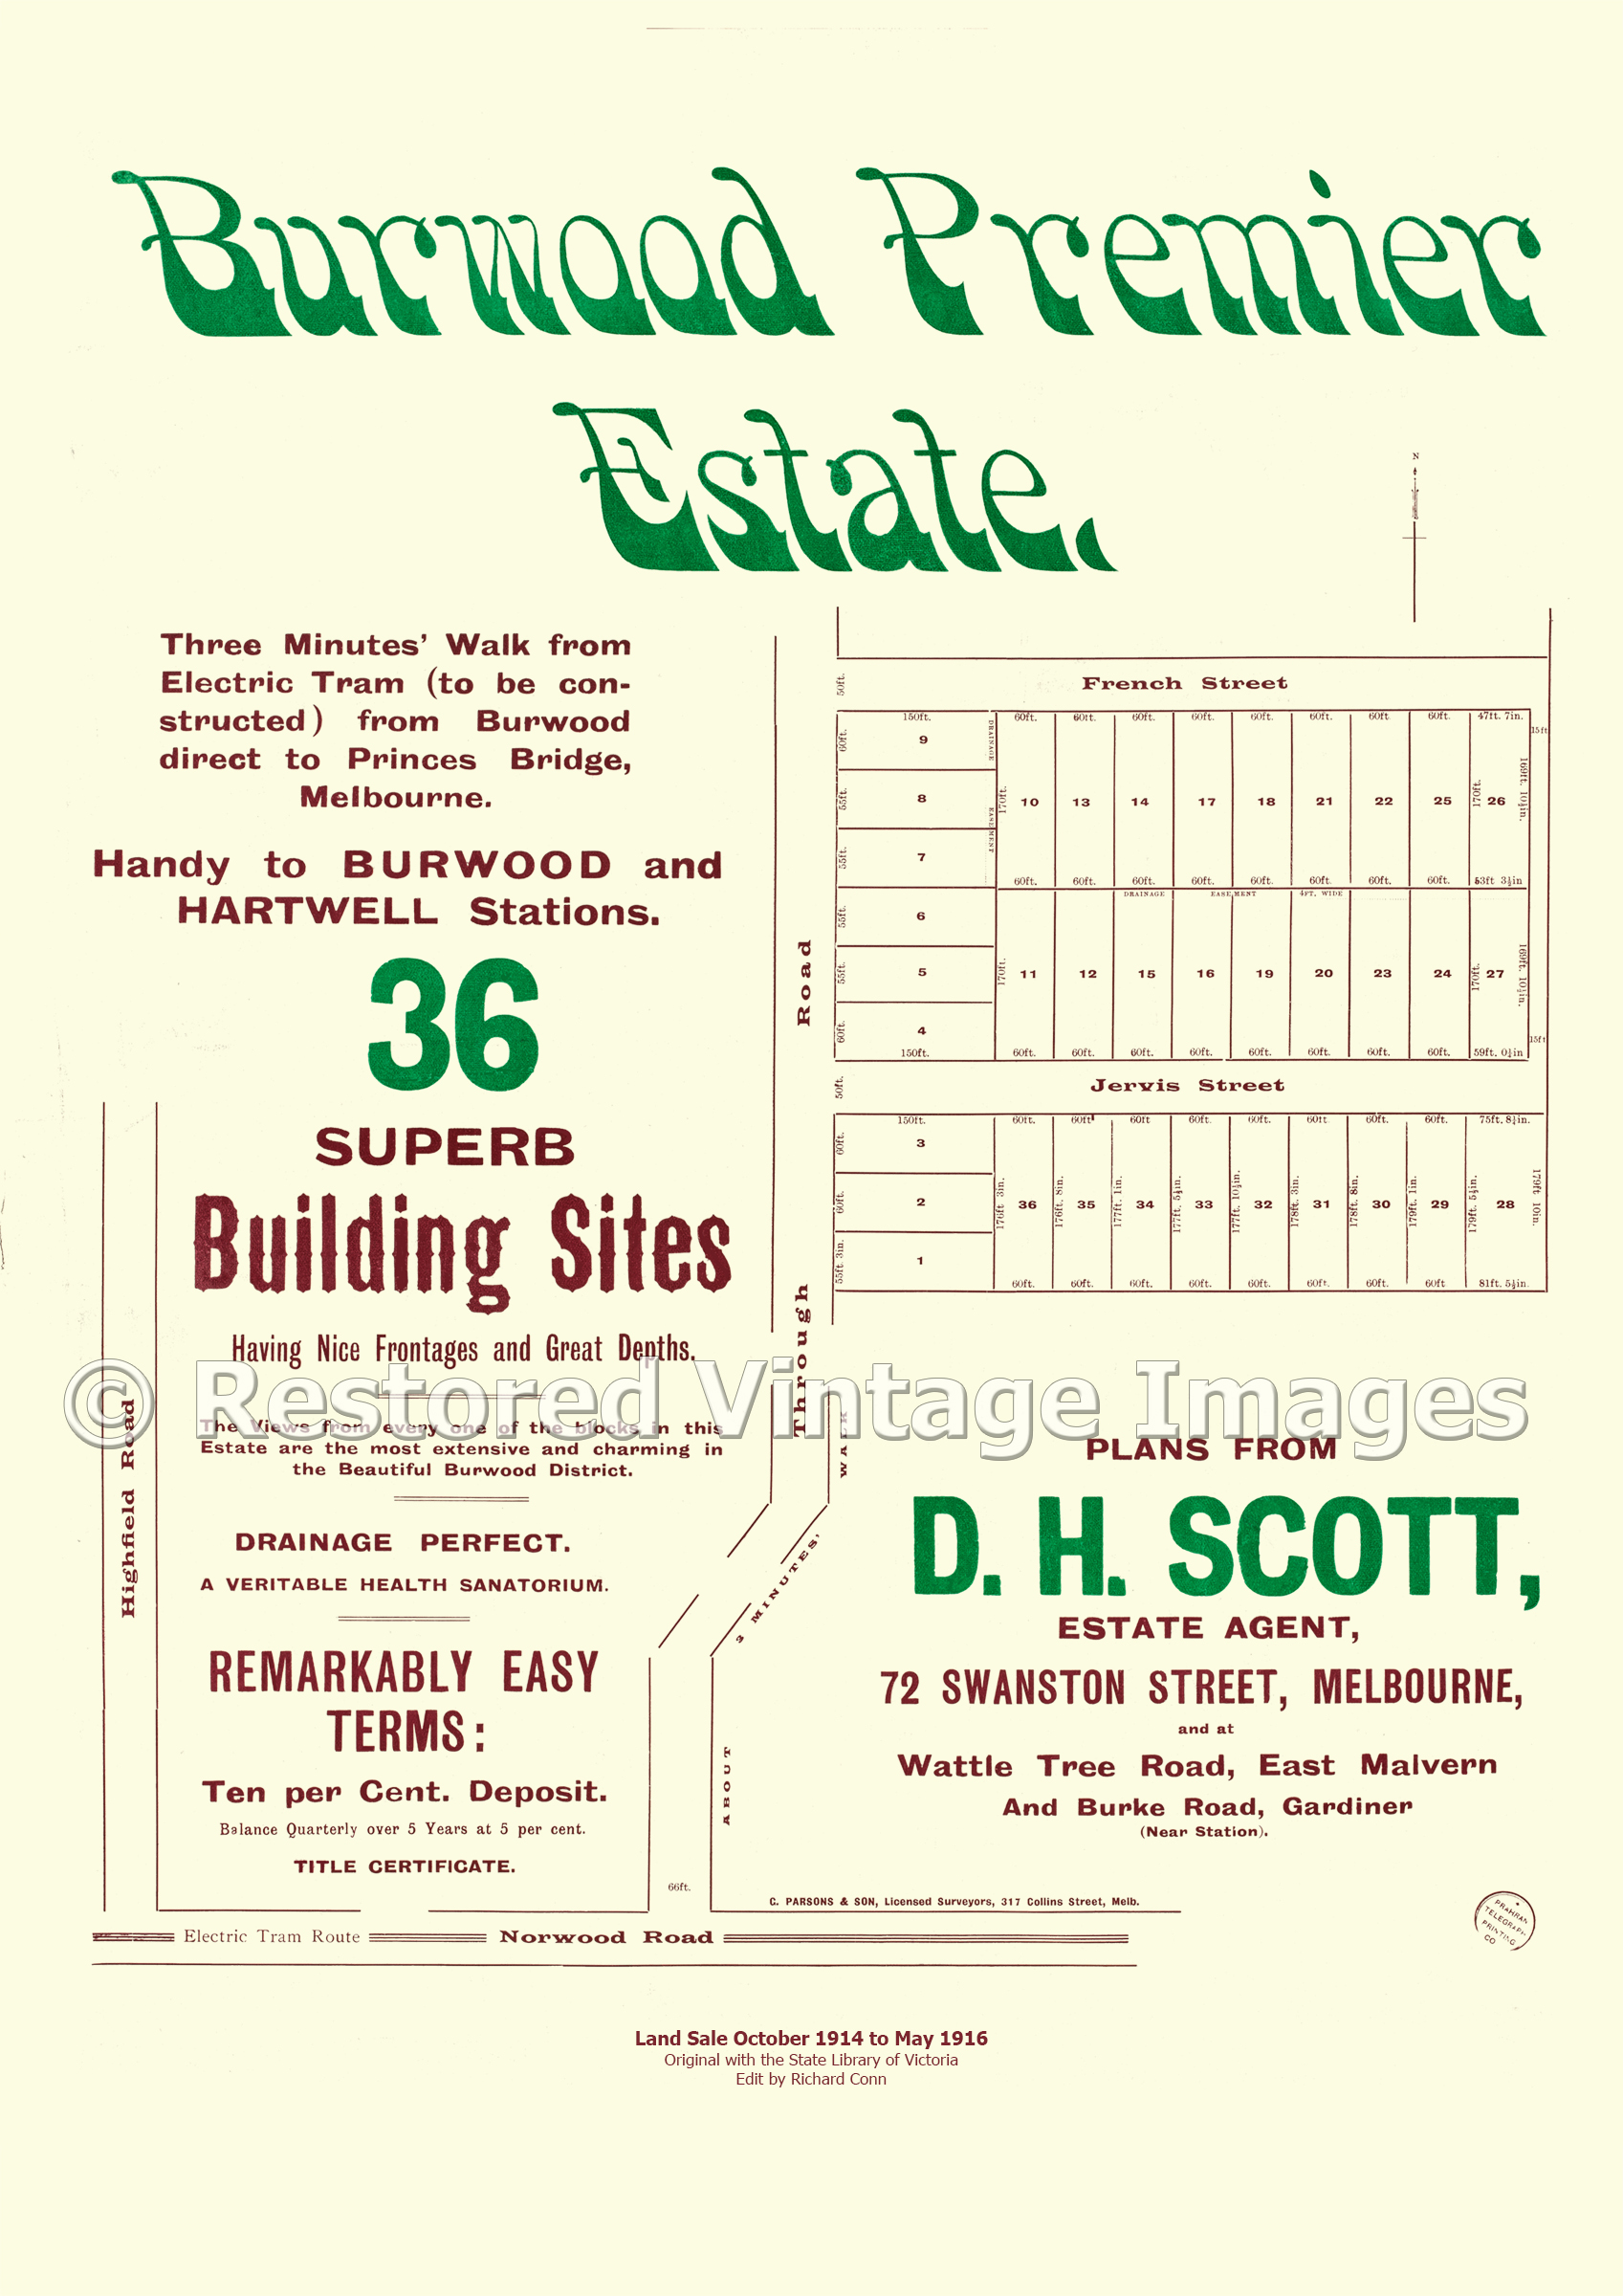 Burwood Premier Estate 1914 To 1916 – Camberwell